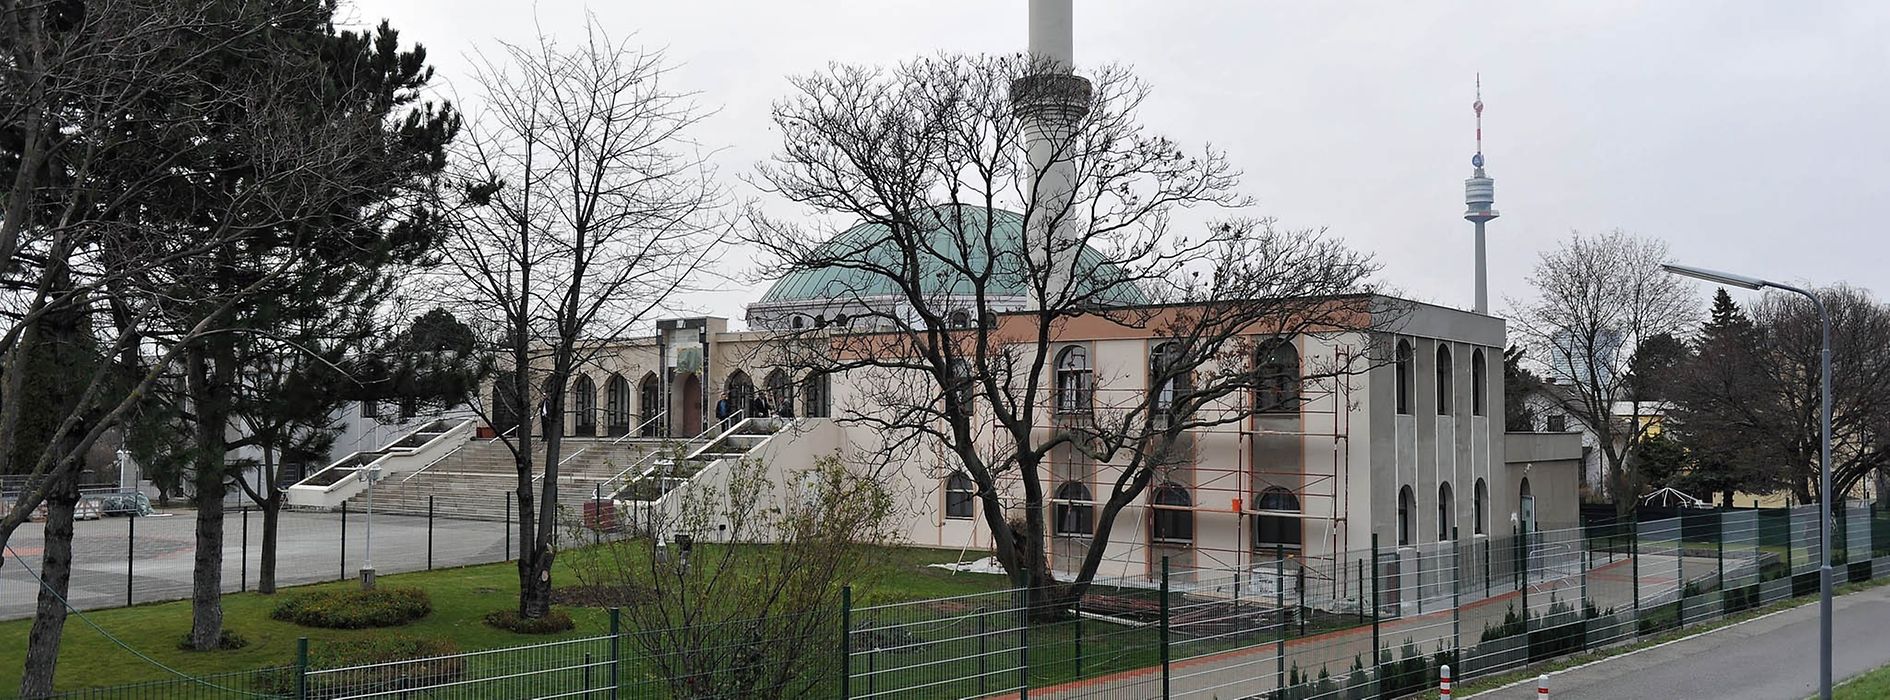 Islamic Center / Mosque